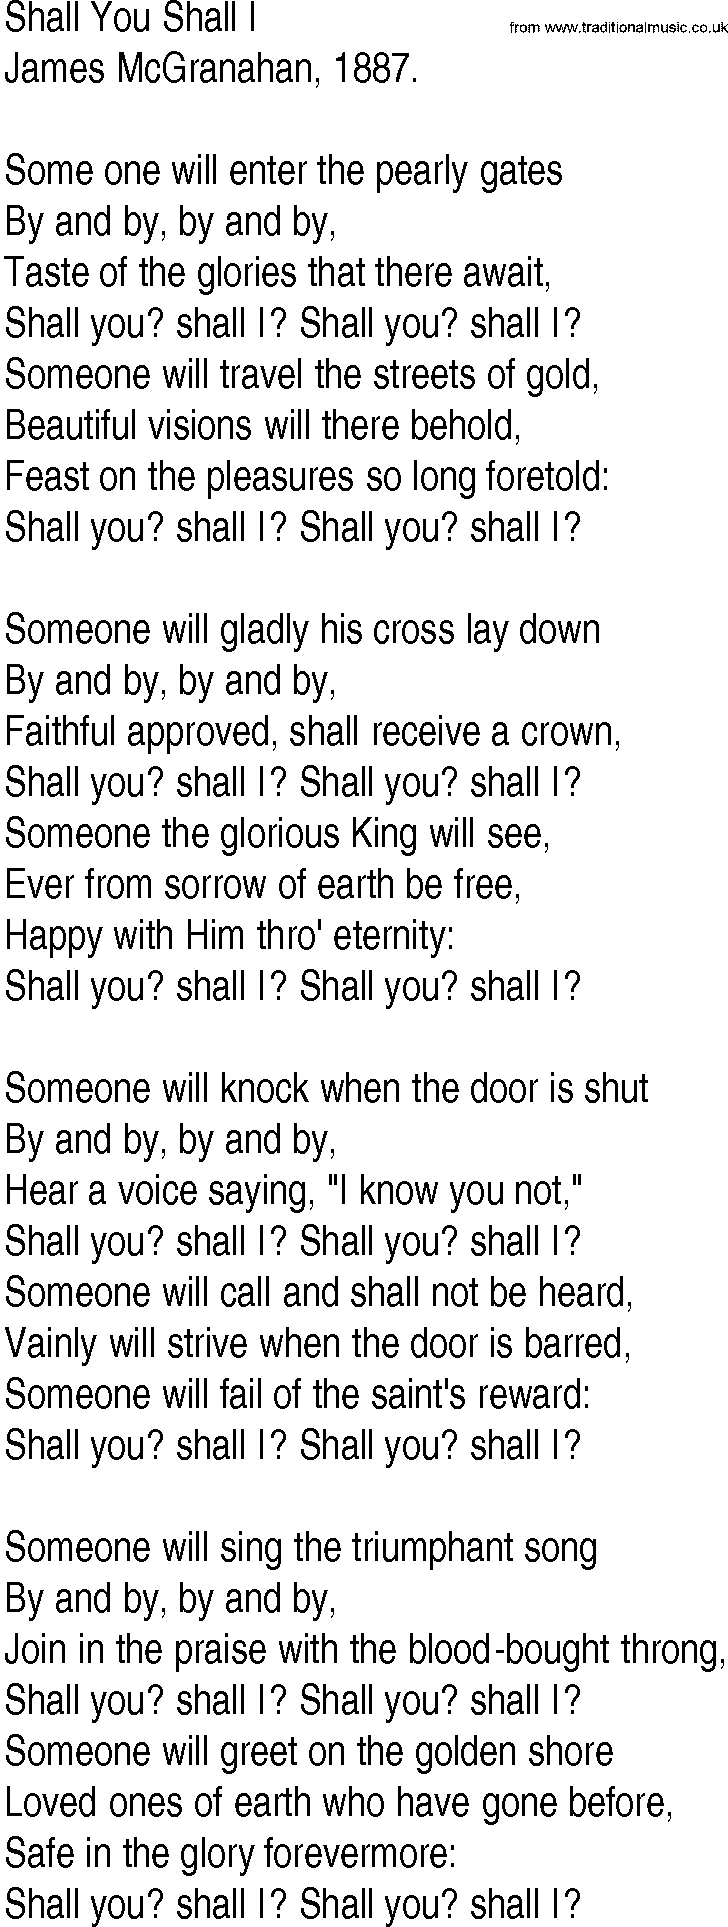 Hymn and Gospel Song: Shall You Shall I by James McGranahan lyrics